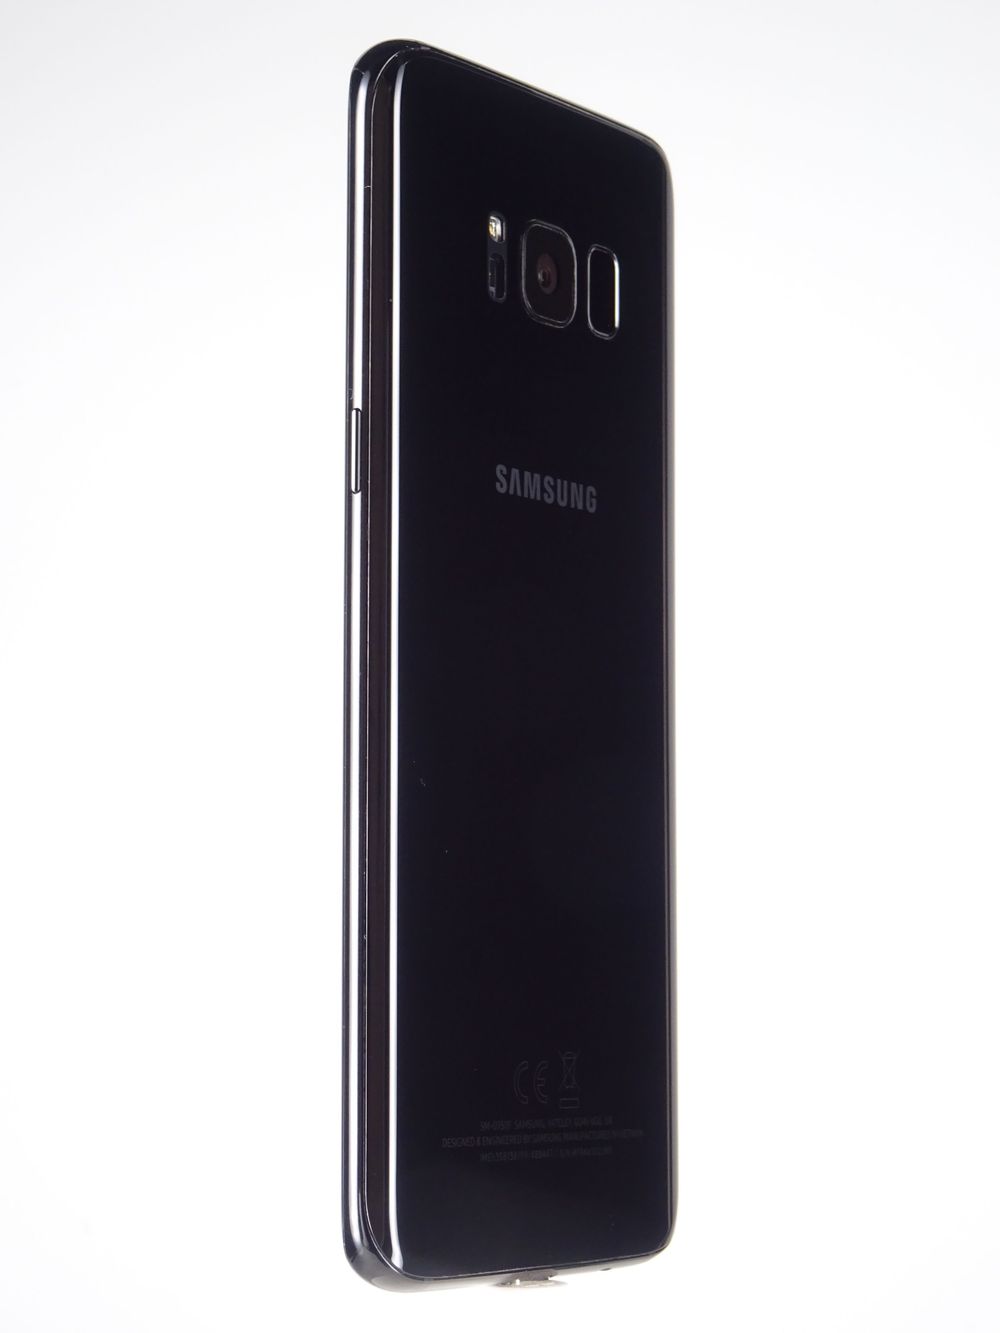 Distinction clergyman side Telefoane Samsung, Galaxy S8, 64 GB, Midnight Black - de la 929.99 lei |  Flip.ro